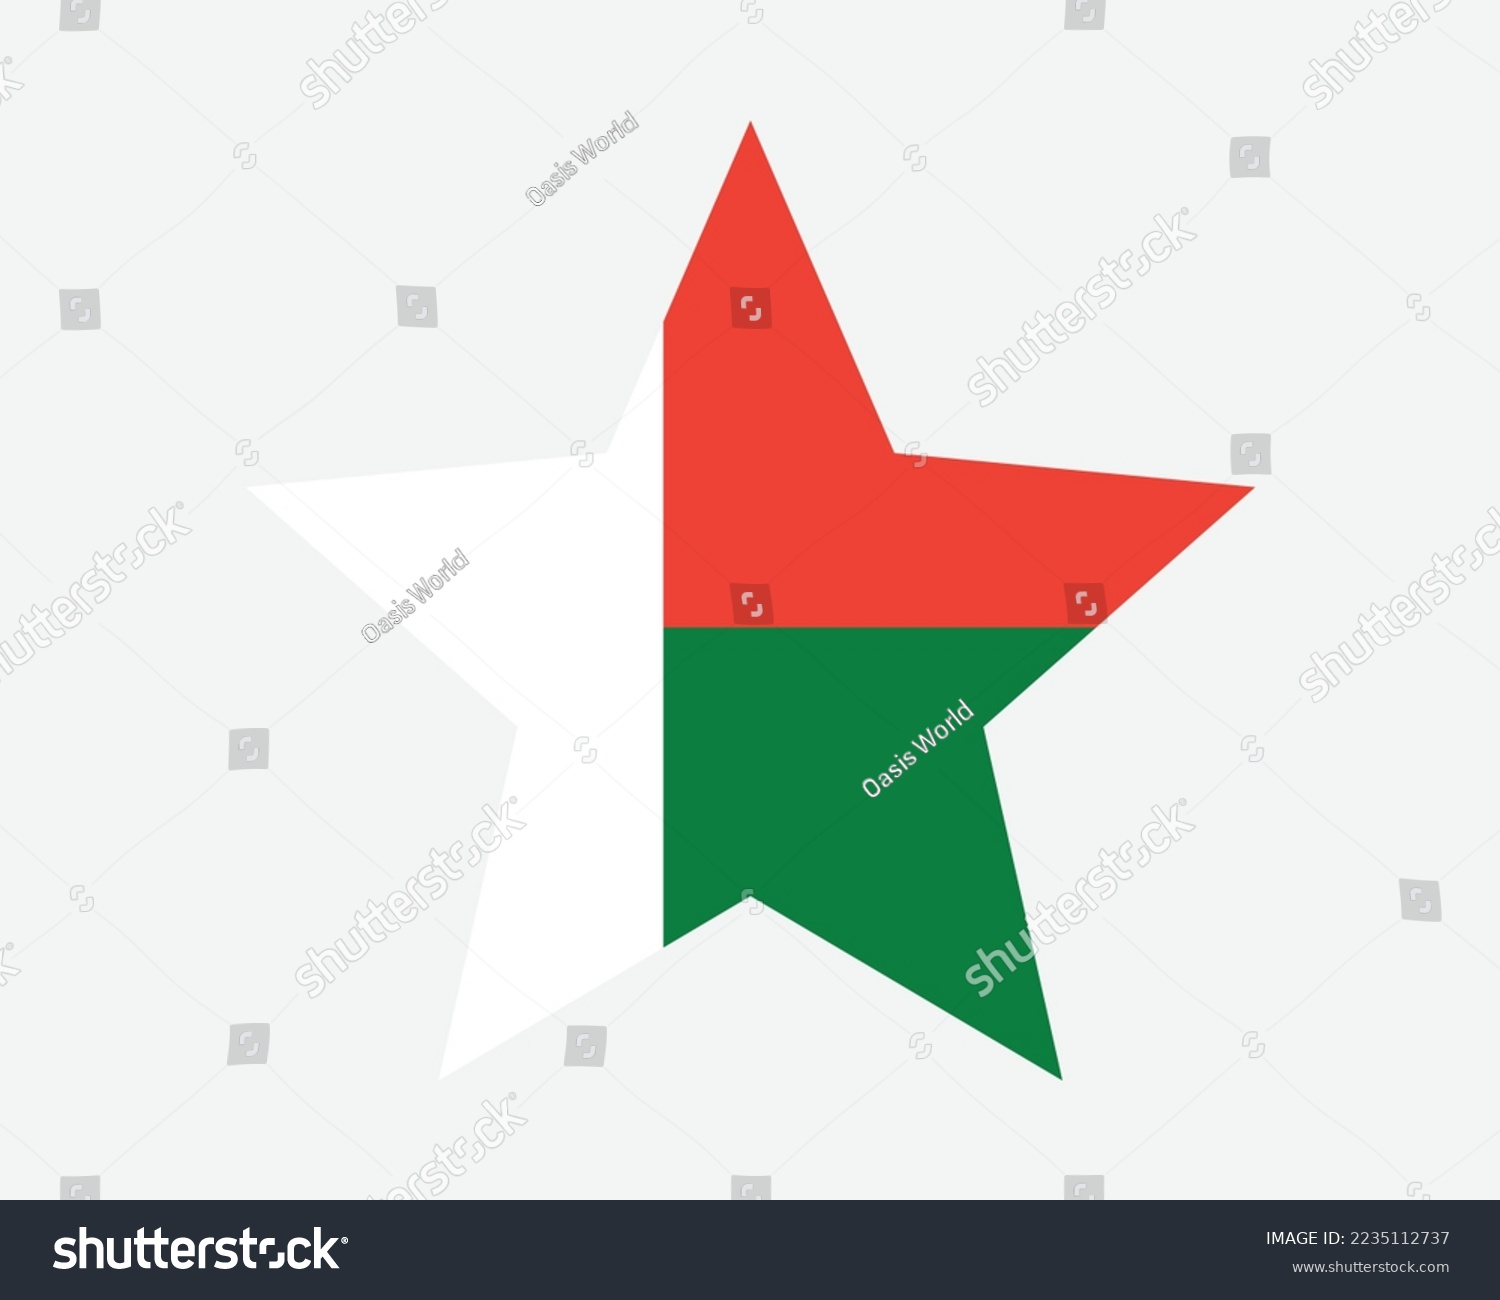 SVG of Madagascar Star Flag. Malagasy Star Shape Flag. Country National Banner Icon Symbol Vector Flat Artwork Graphic Illustration svg